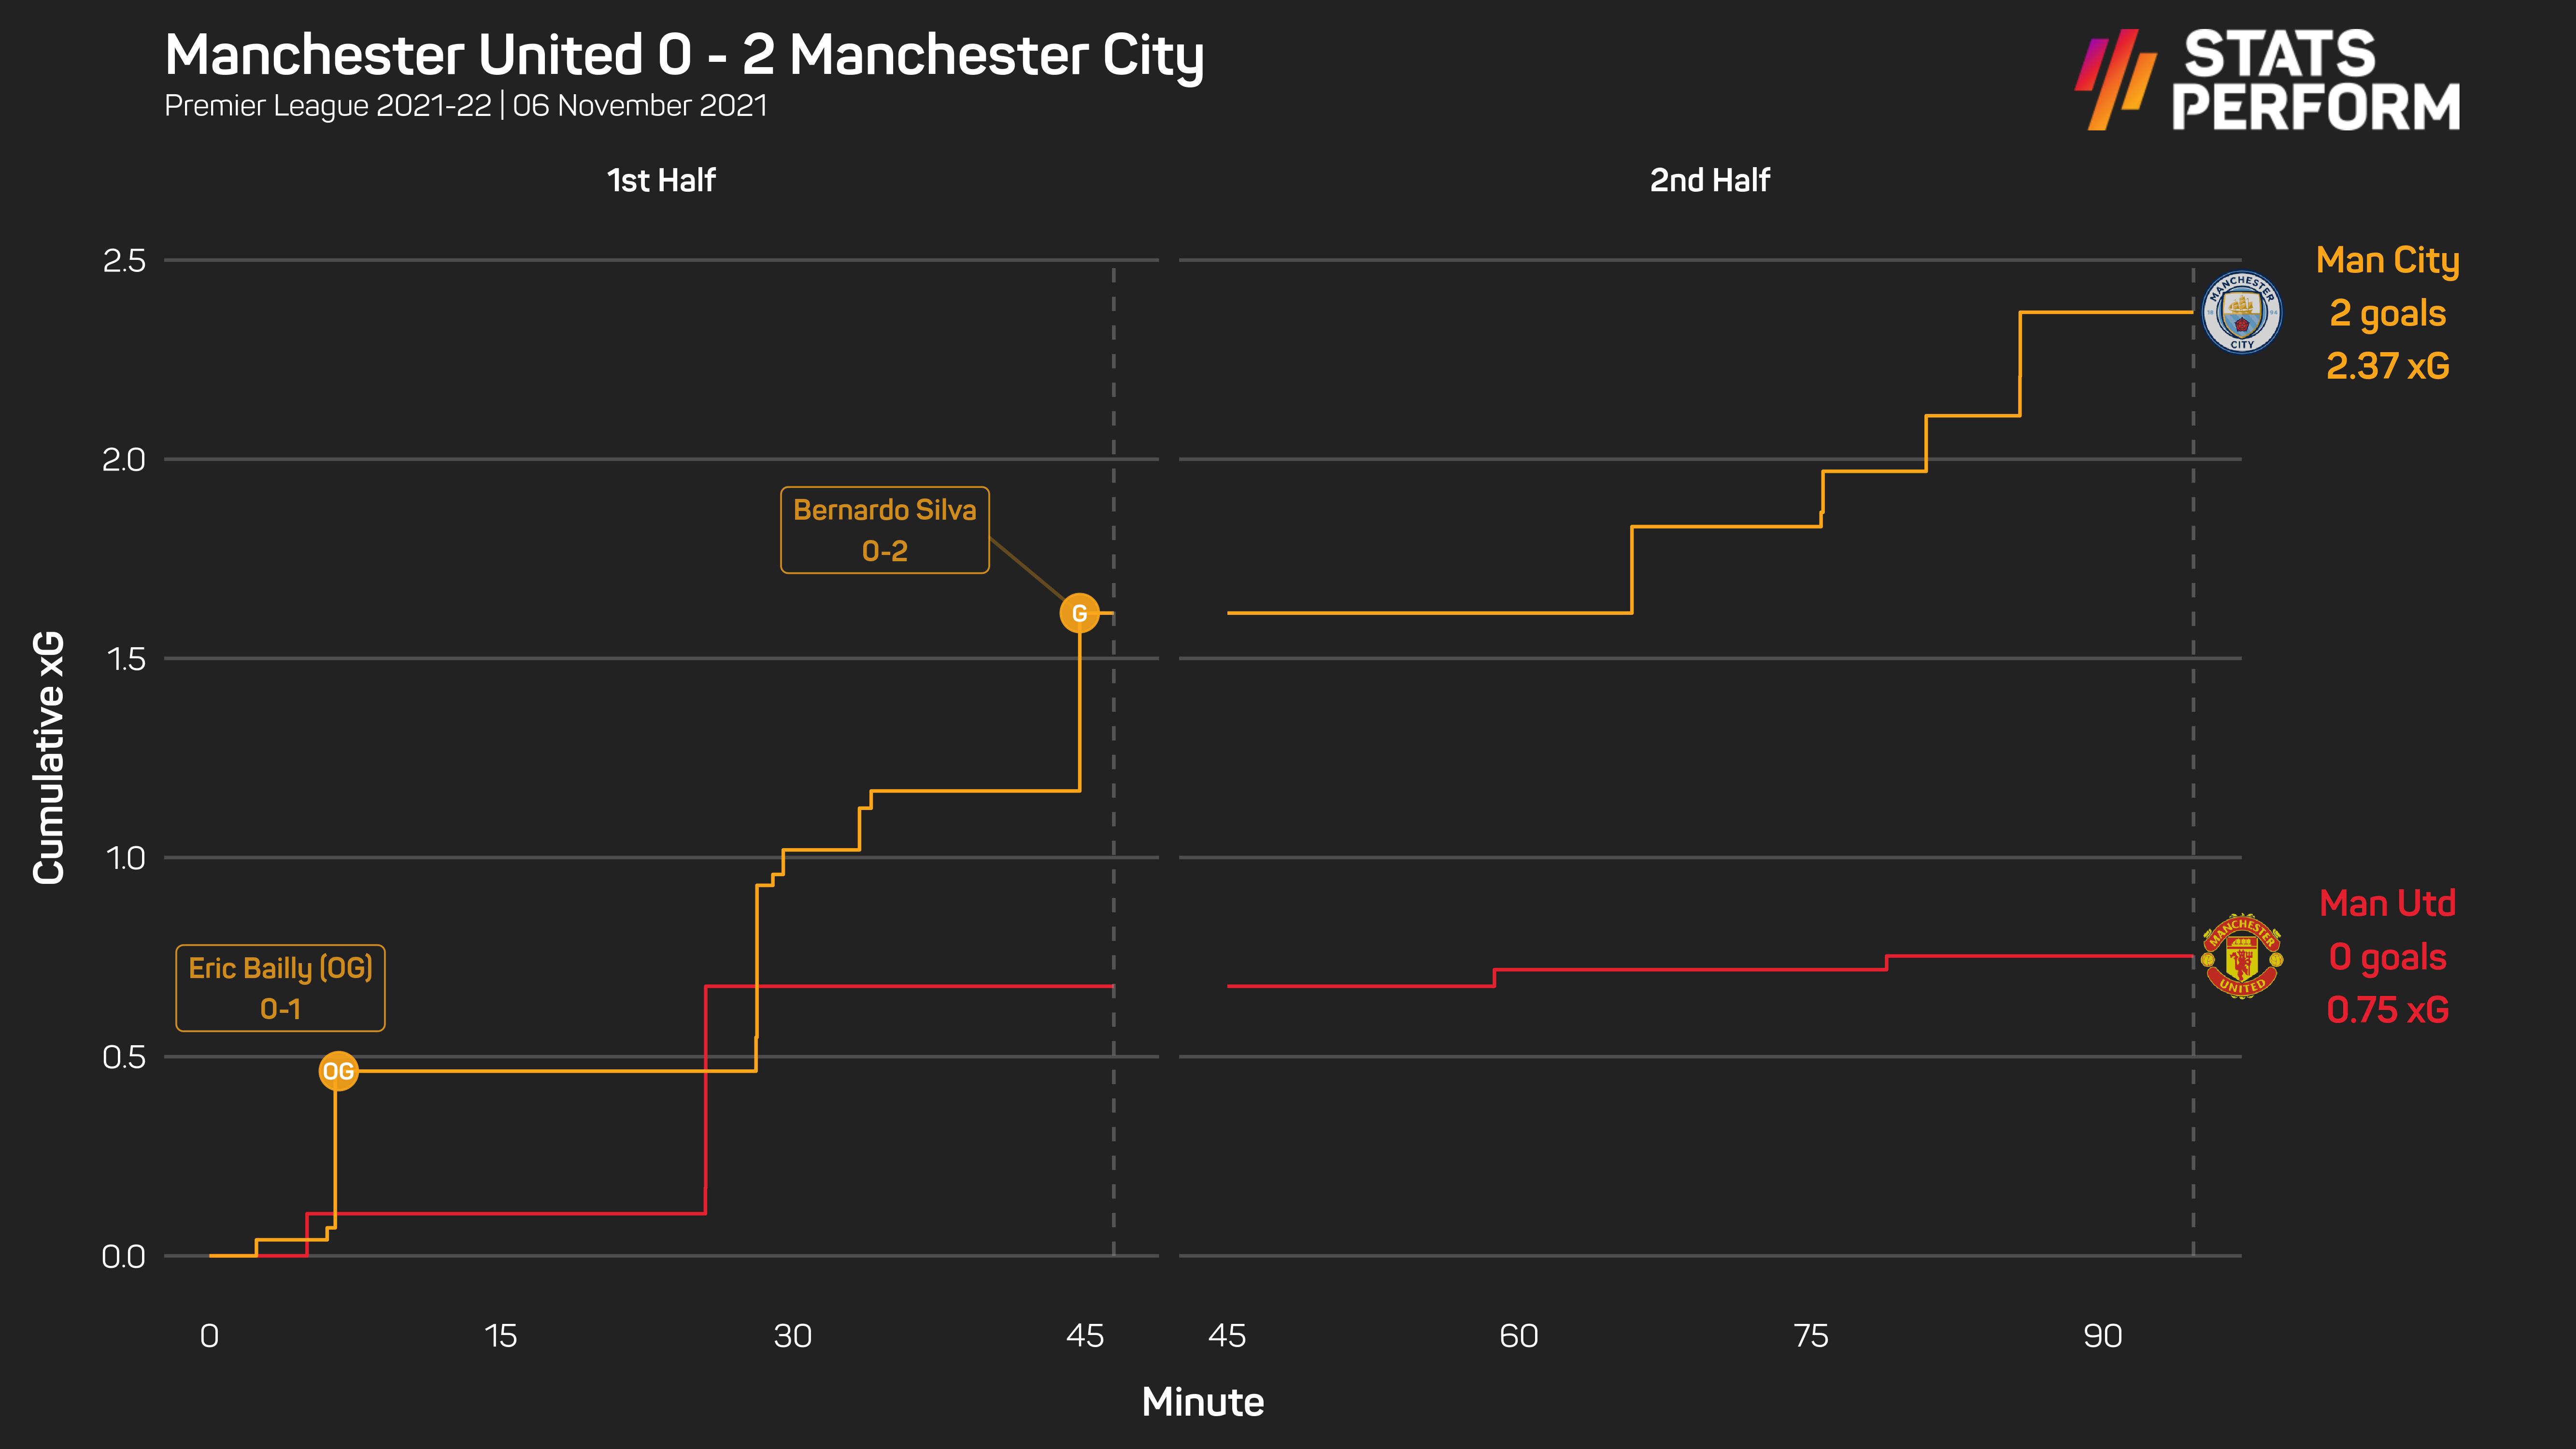 Man Utd were no match for Man City this season